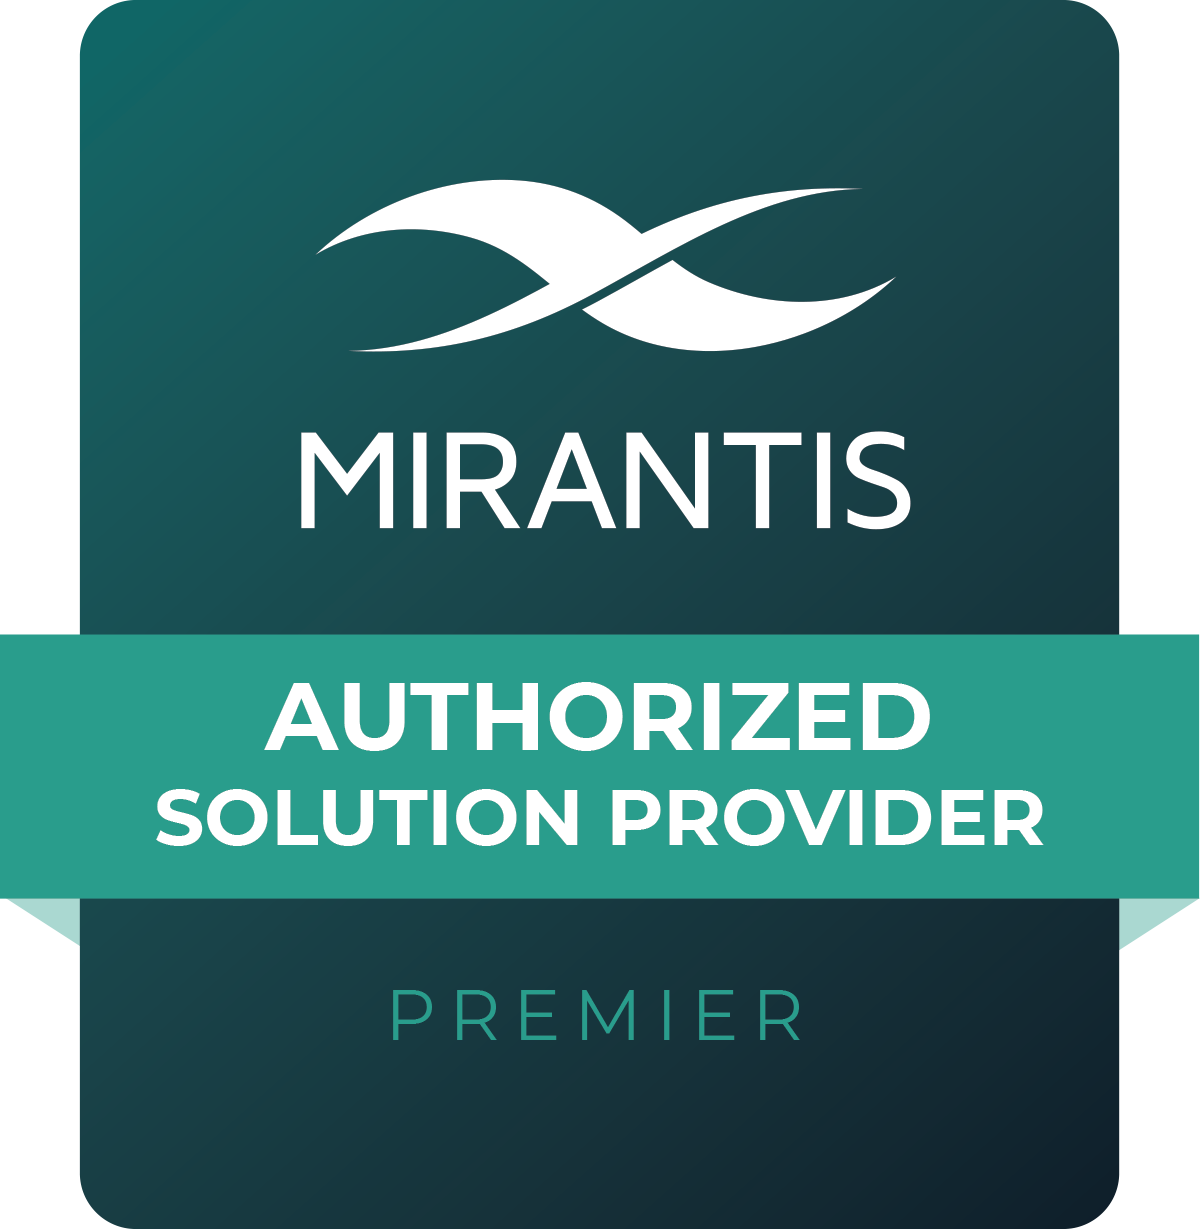 Mirantis Premier partner logo